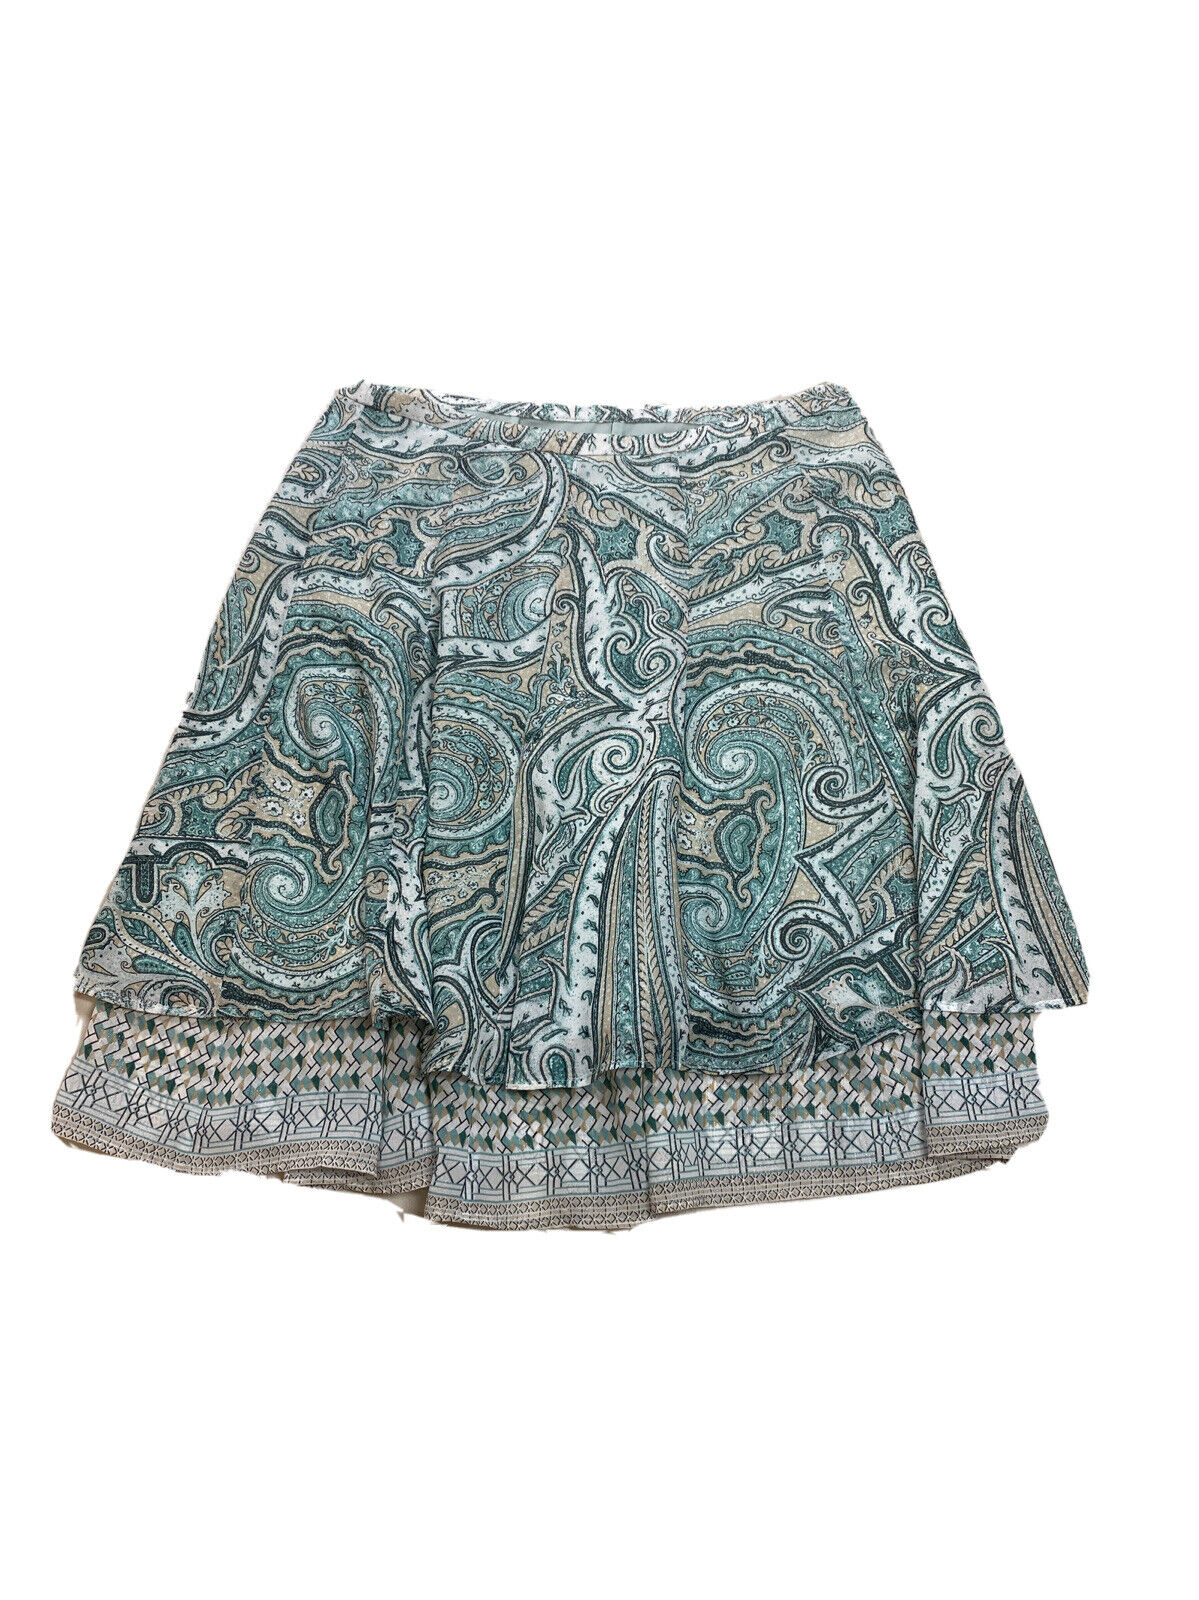 White House Black Market Women's Blue Metallic Paisley Flowy Skirt - 2